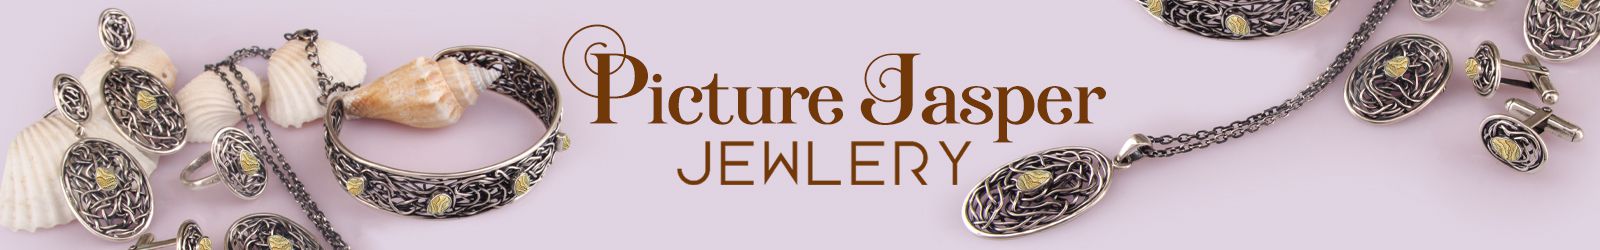 Silver Picture Jasper Jewelry Wholesale Supplier